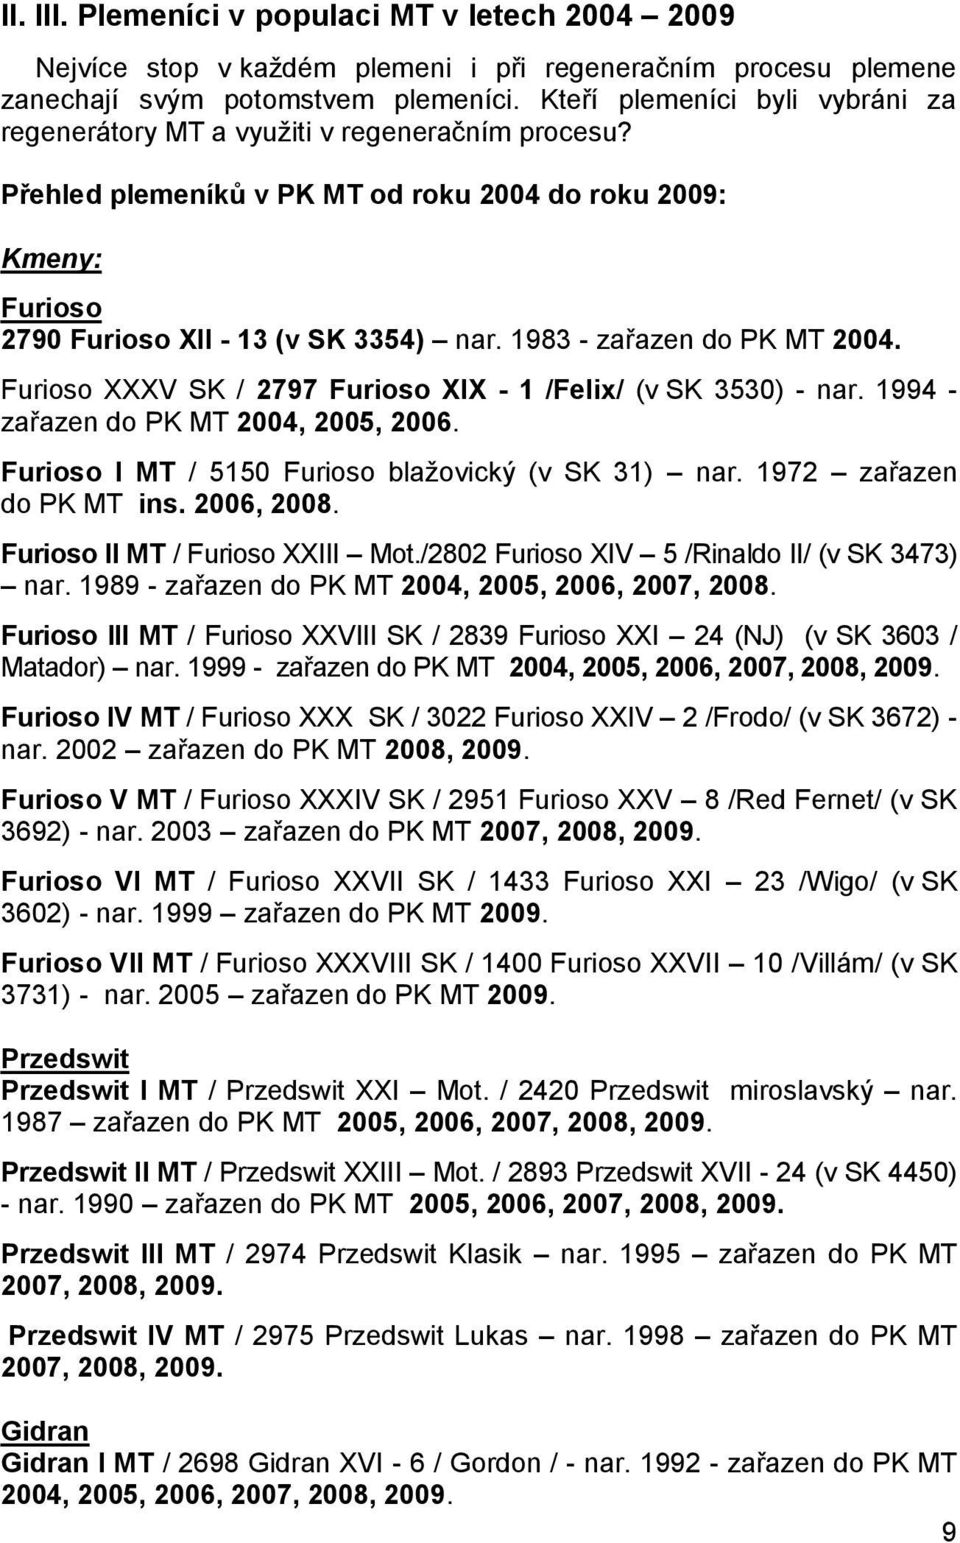 1983 - zařazen do PK MT 2004. Furioso XXXV SK / 2797 Furioso XIX - 1 /Felix/ (v SK 3530) - nar. 1994 - zařazen do PK MT 2004, 2005, 2006. Furioso I MT / 5150 Furioso blažovický (v SK 31) nar.